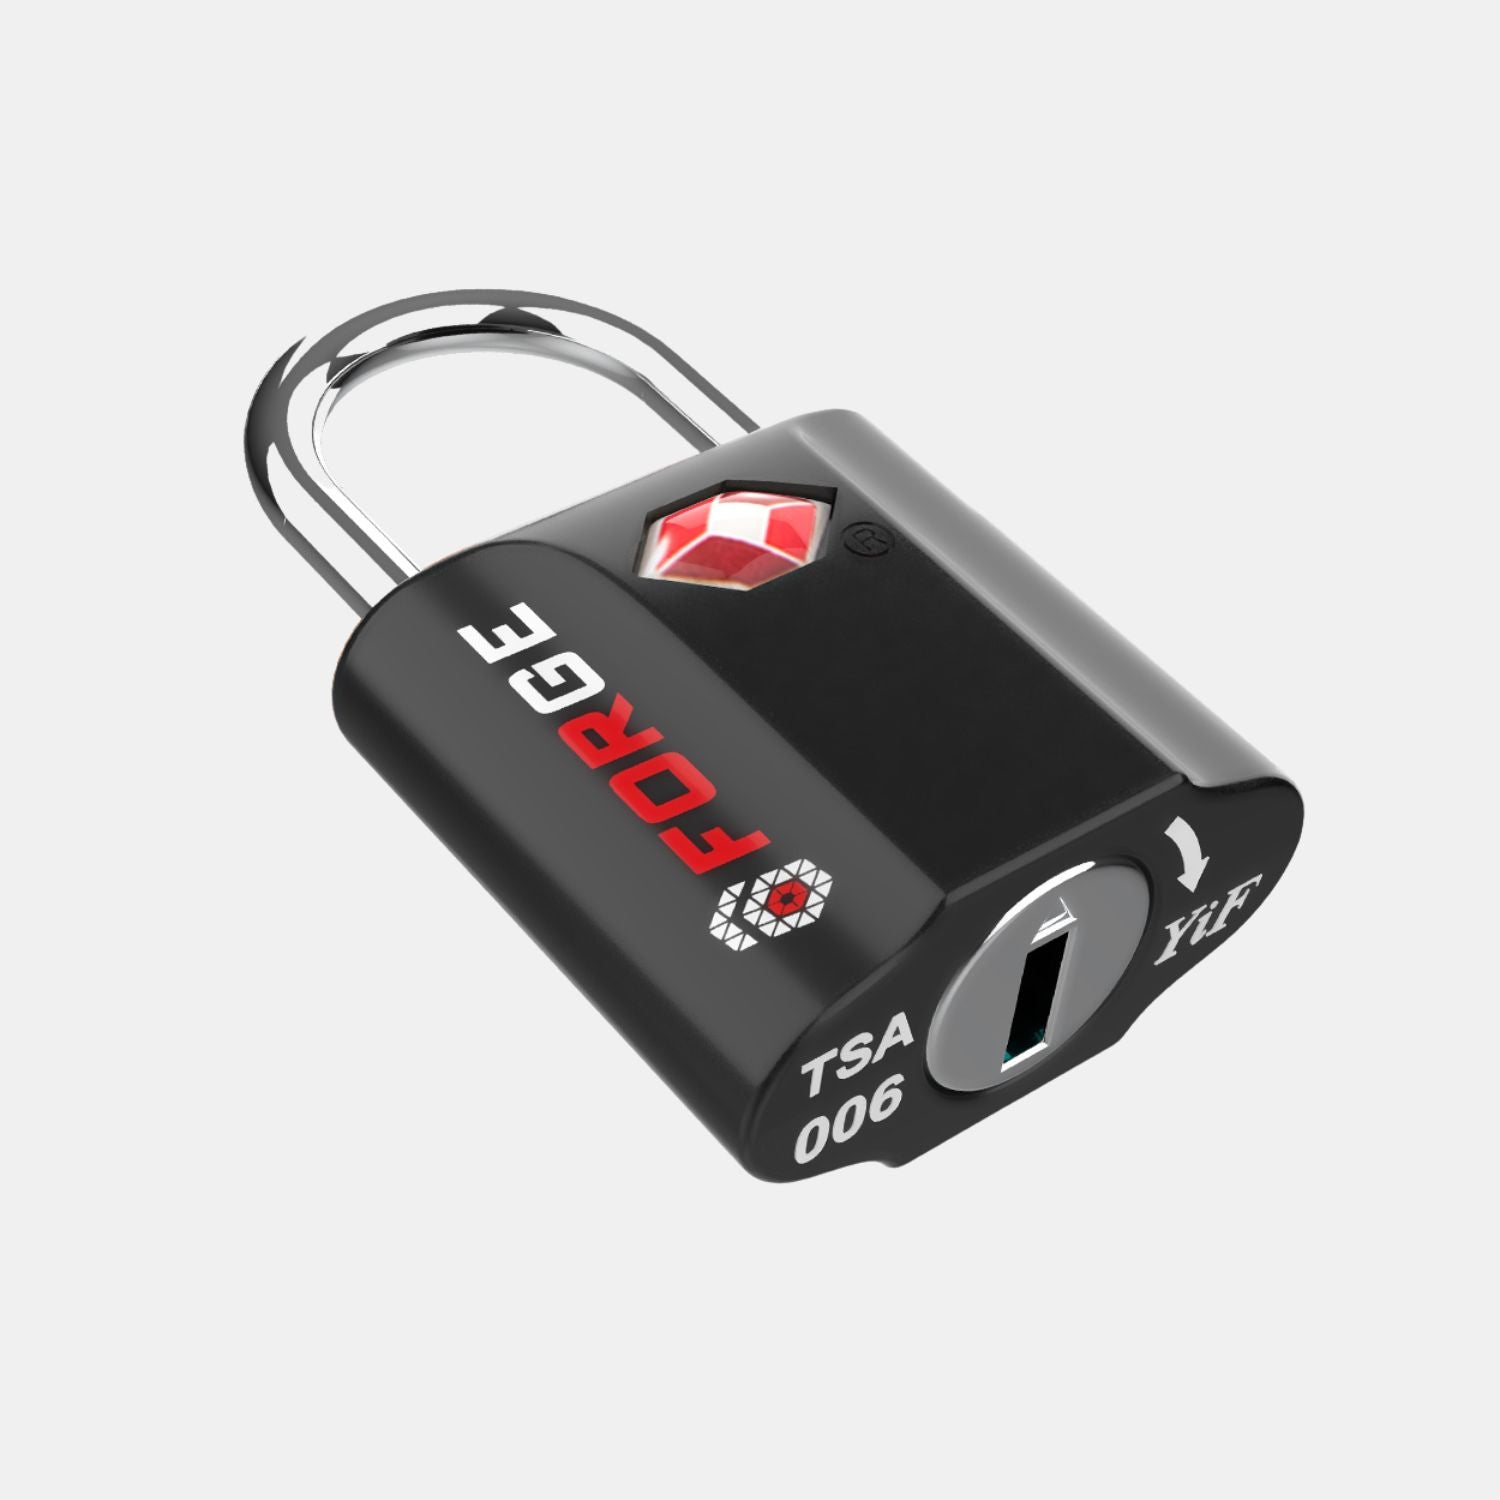 TSA Approved Dimple Key Luggage Lock - TSA006 Key, Ultra-Secure Small Size Lock. Black 4 Locks